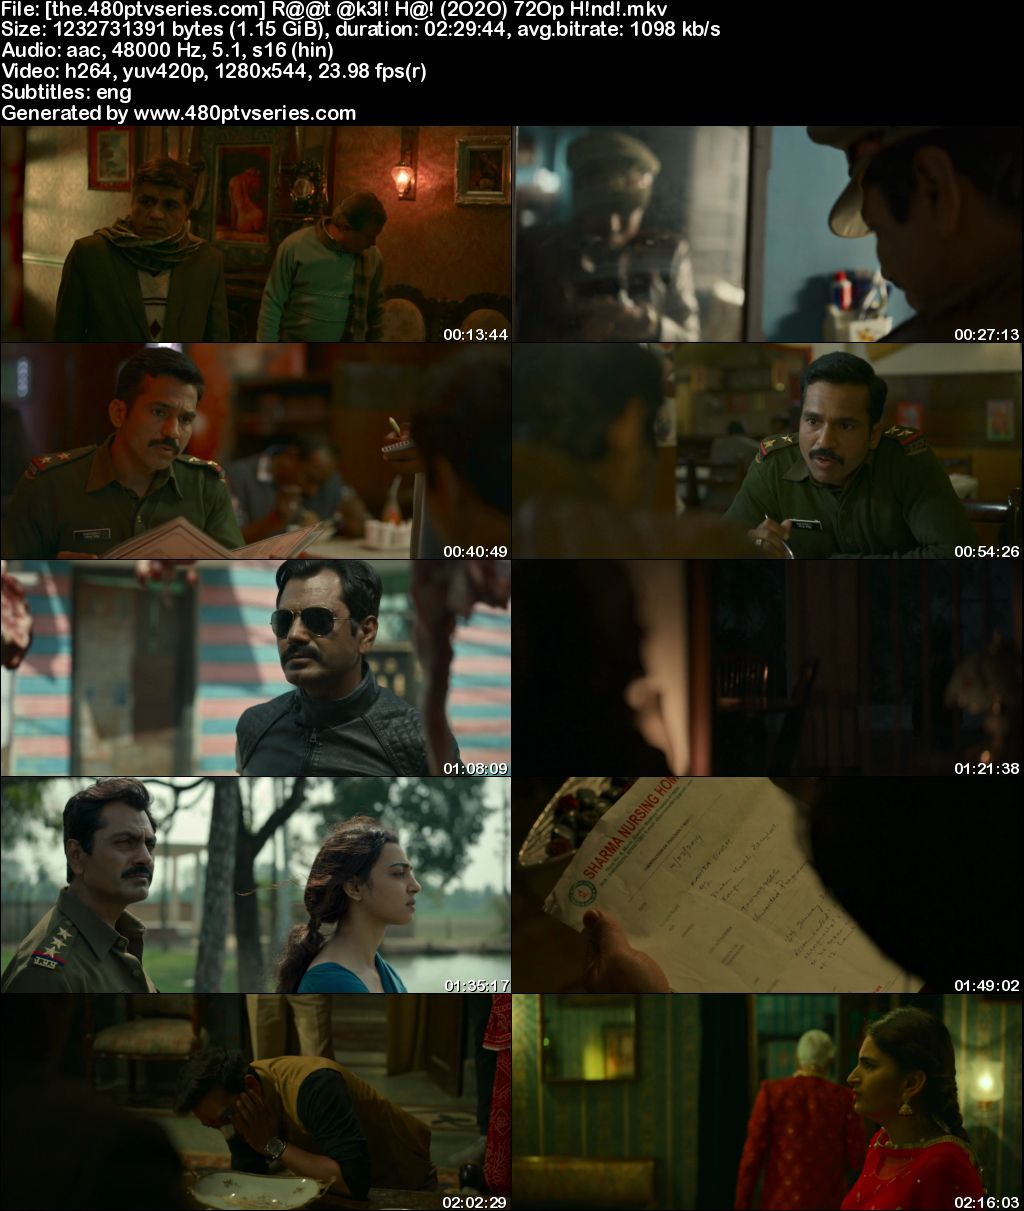 Watch Online Free Raat Akeli Hai (2020) Full Hindi Movie Download 480p 720p Web-DL